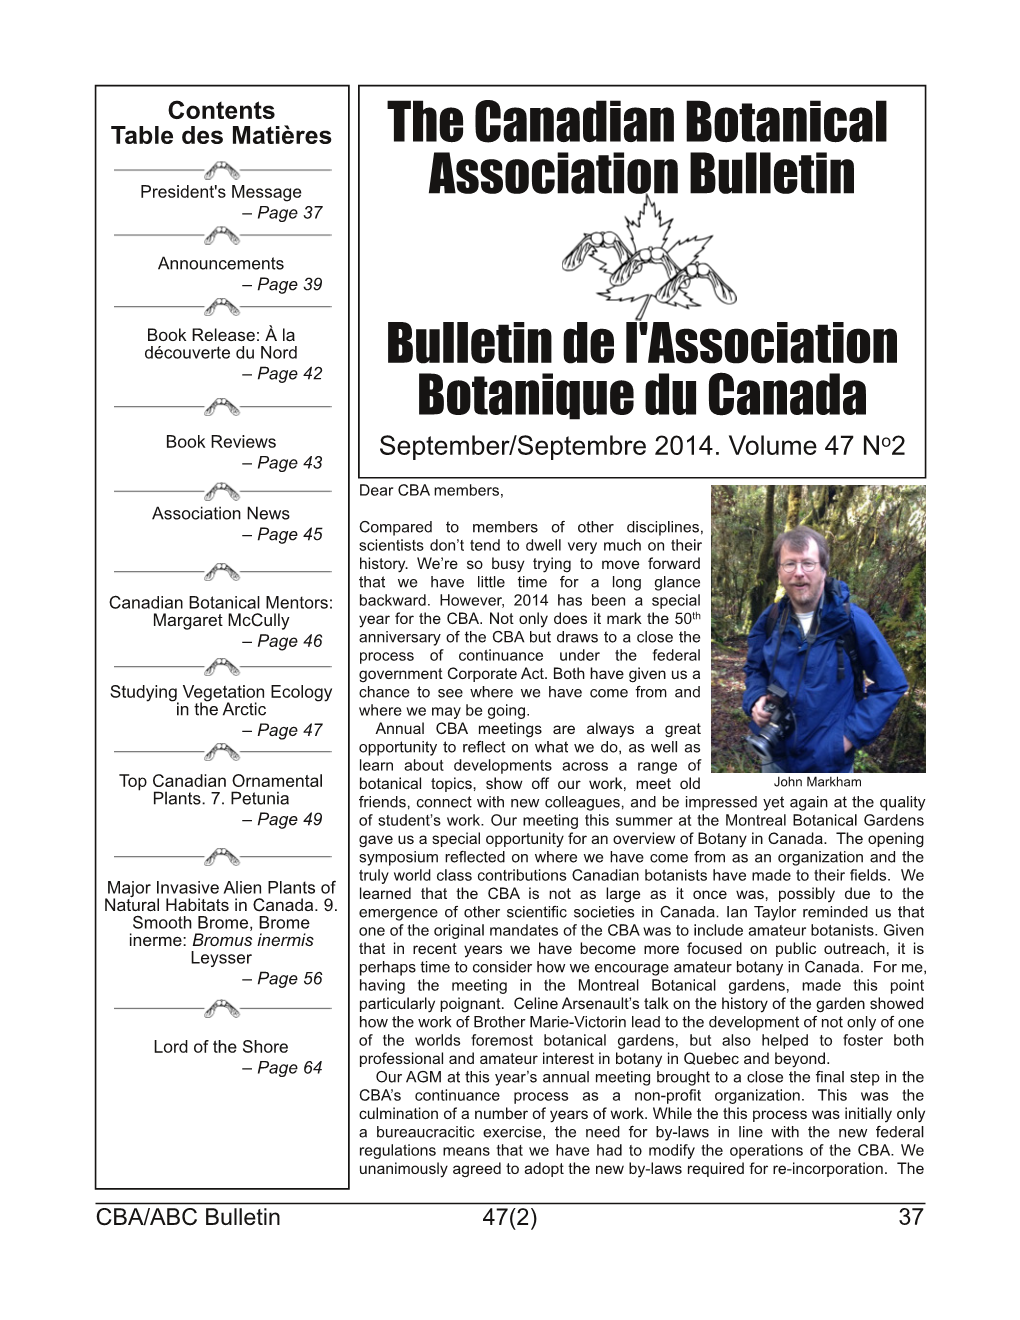 The Canadian Botanical Association Bulletin Bulletin De L'association